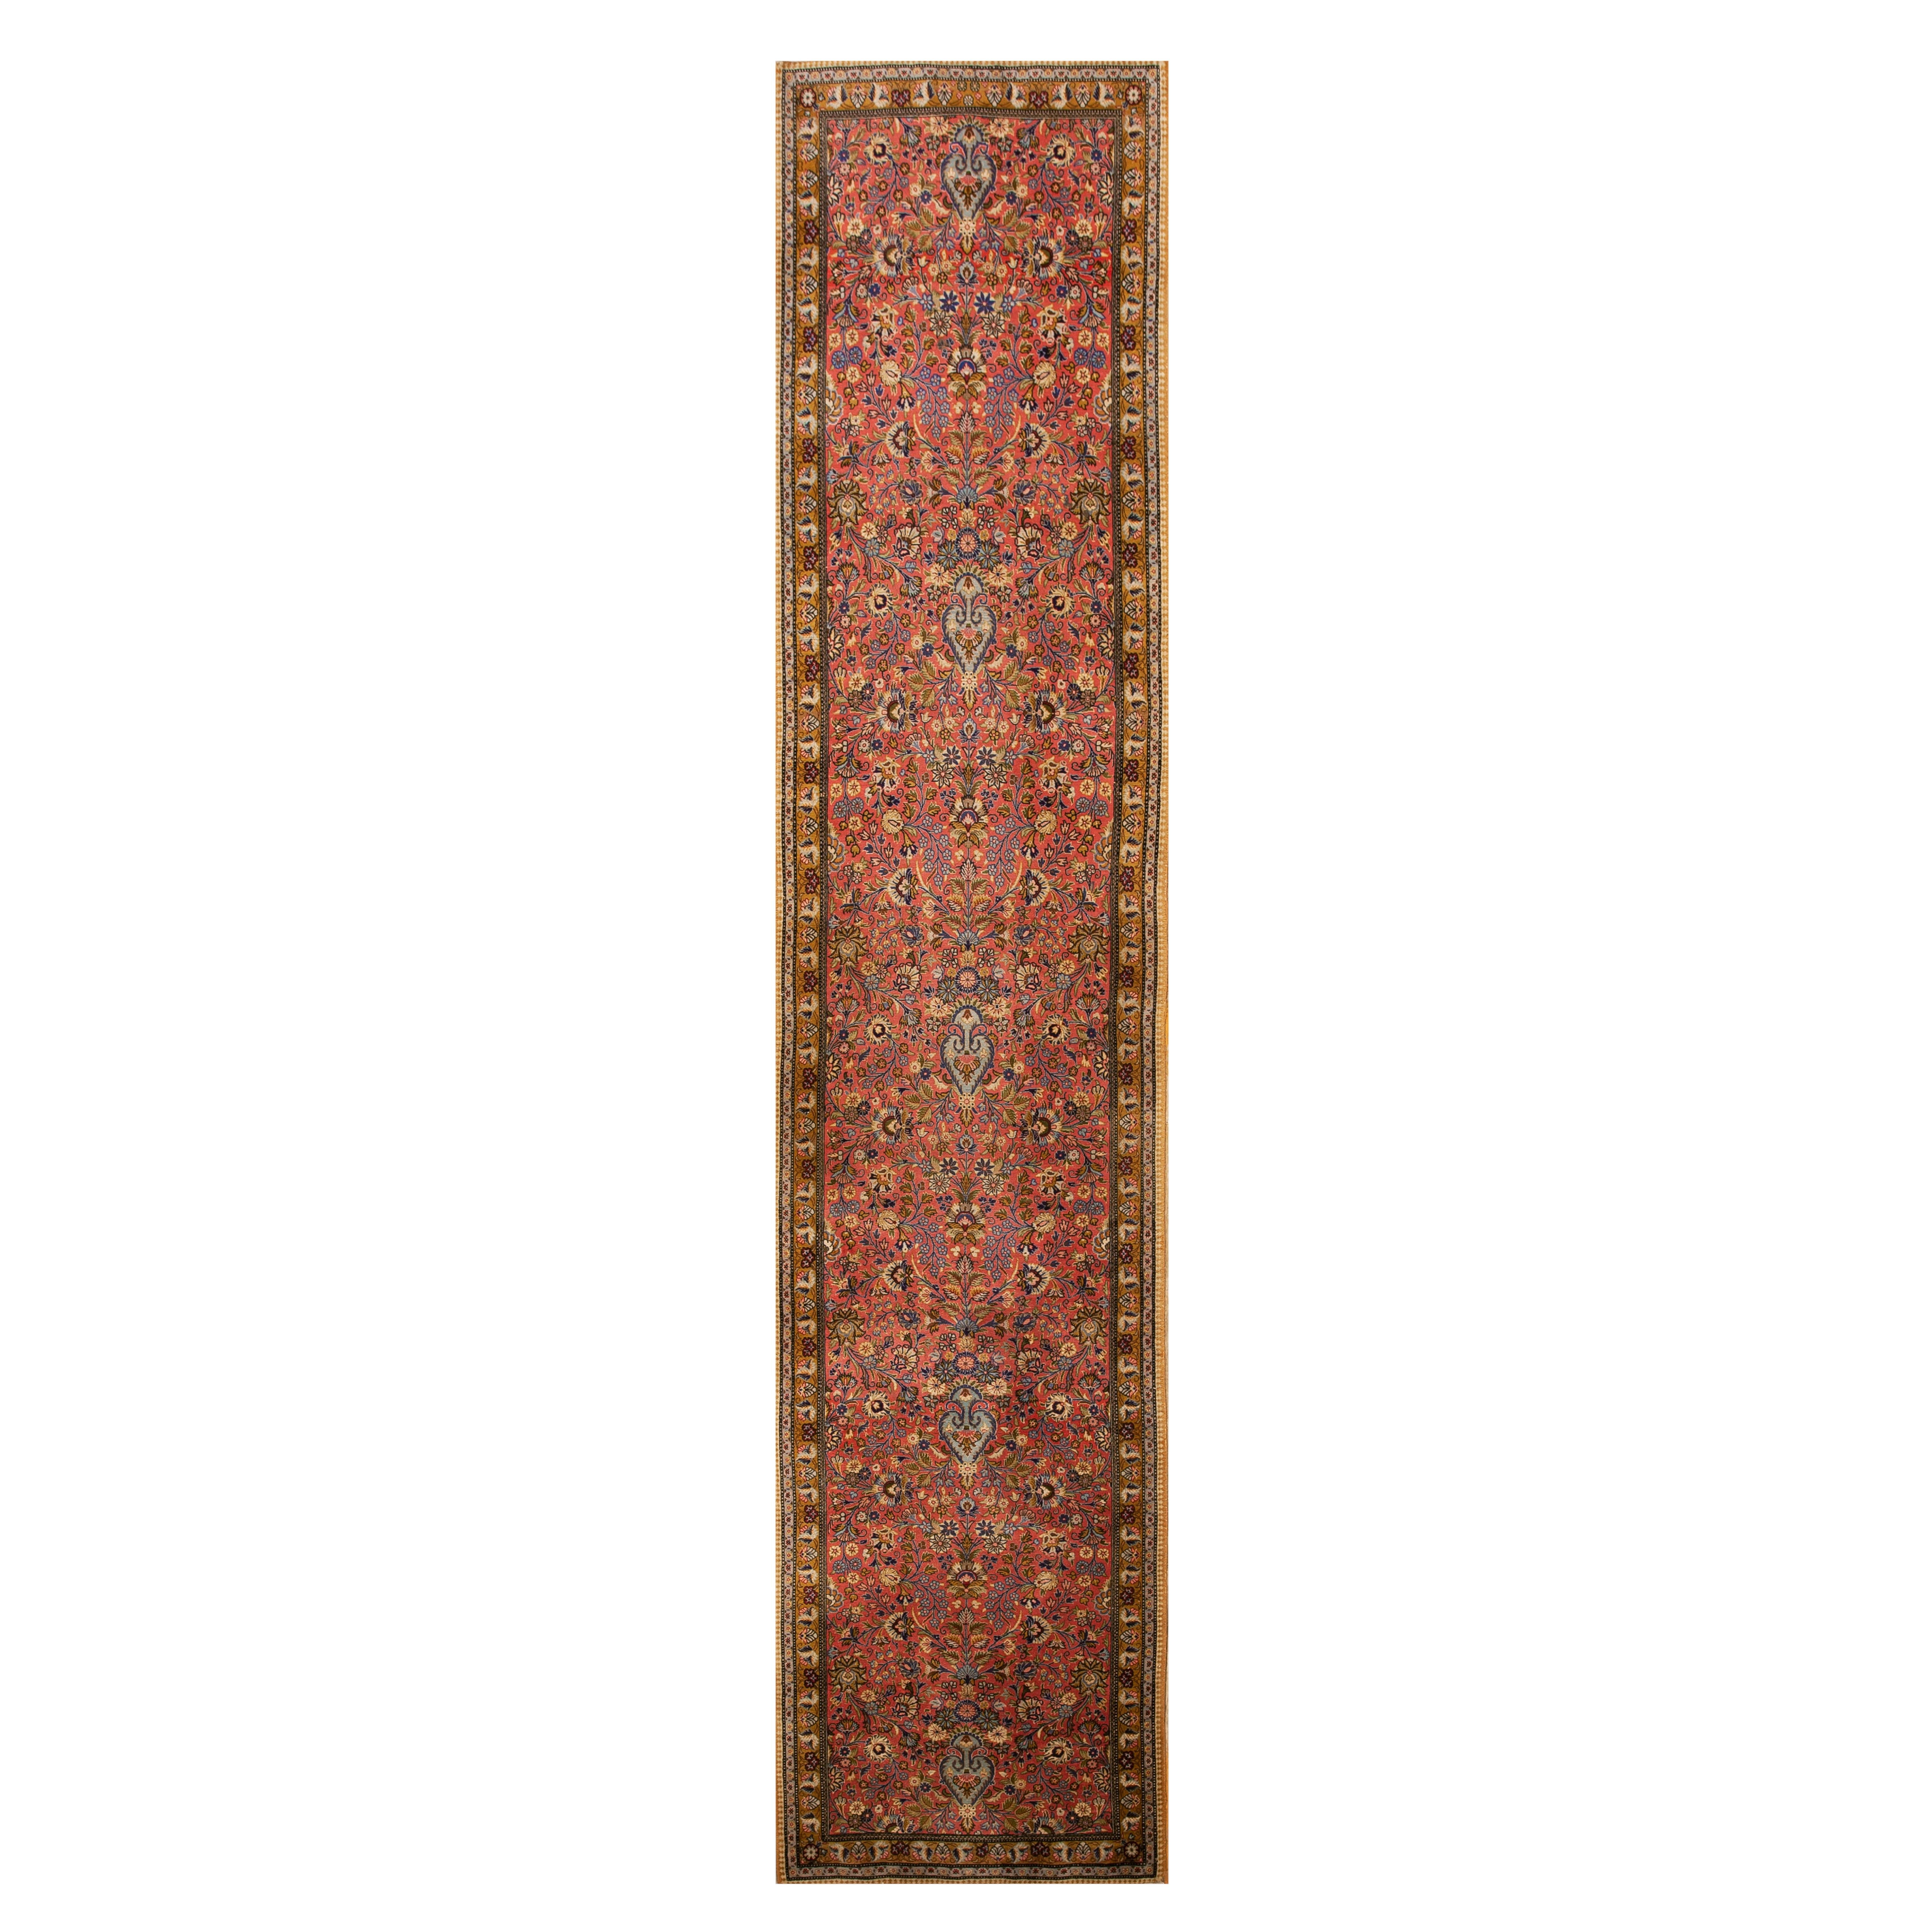 Antique Persian Tabriz Rug 2'10" x 13'3"